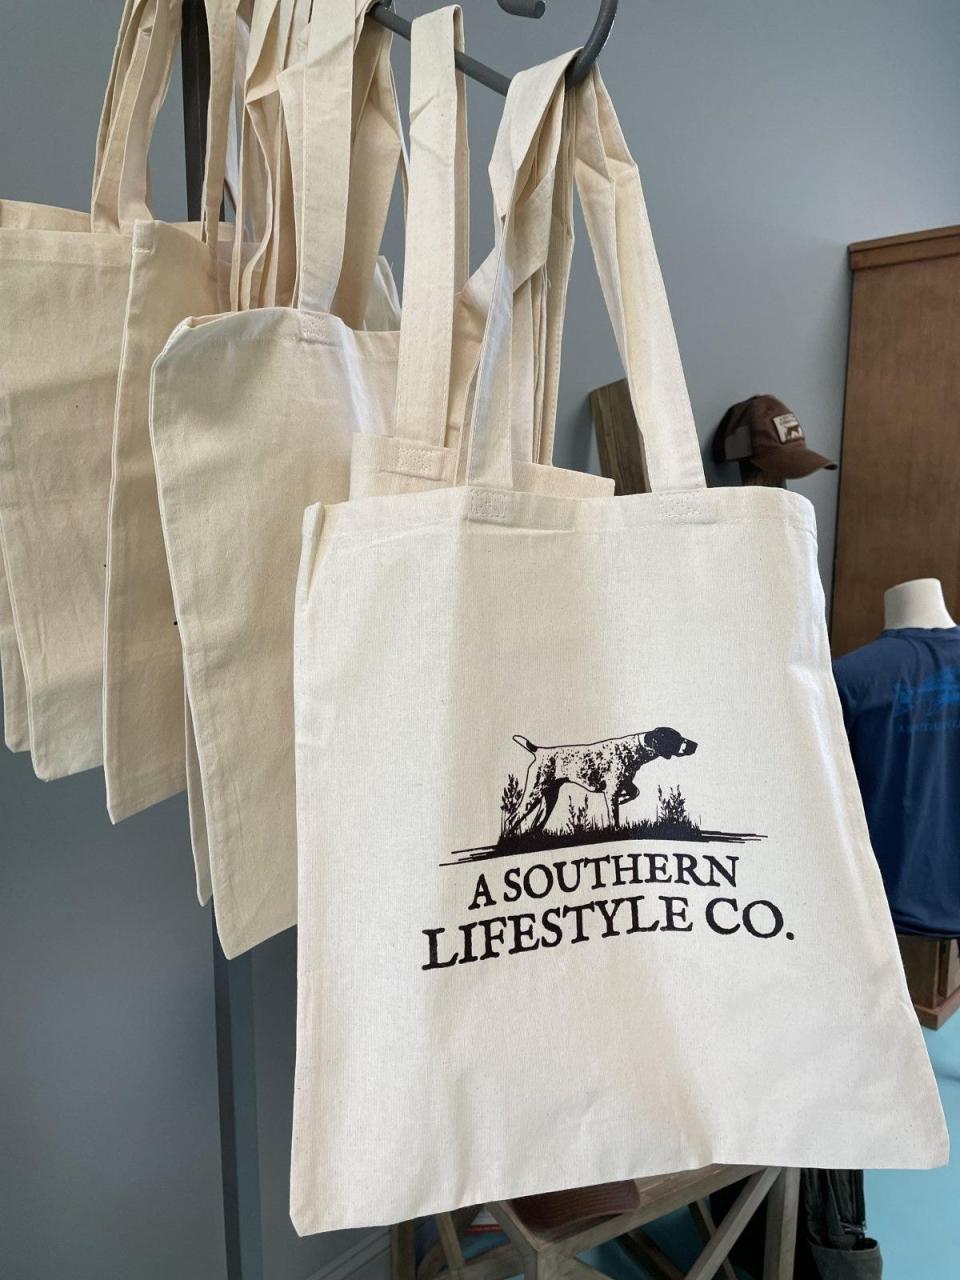 A Southern Lifestyle Co. organic tote bag. ($10)